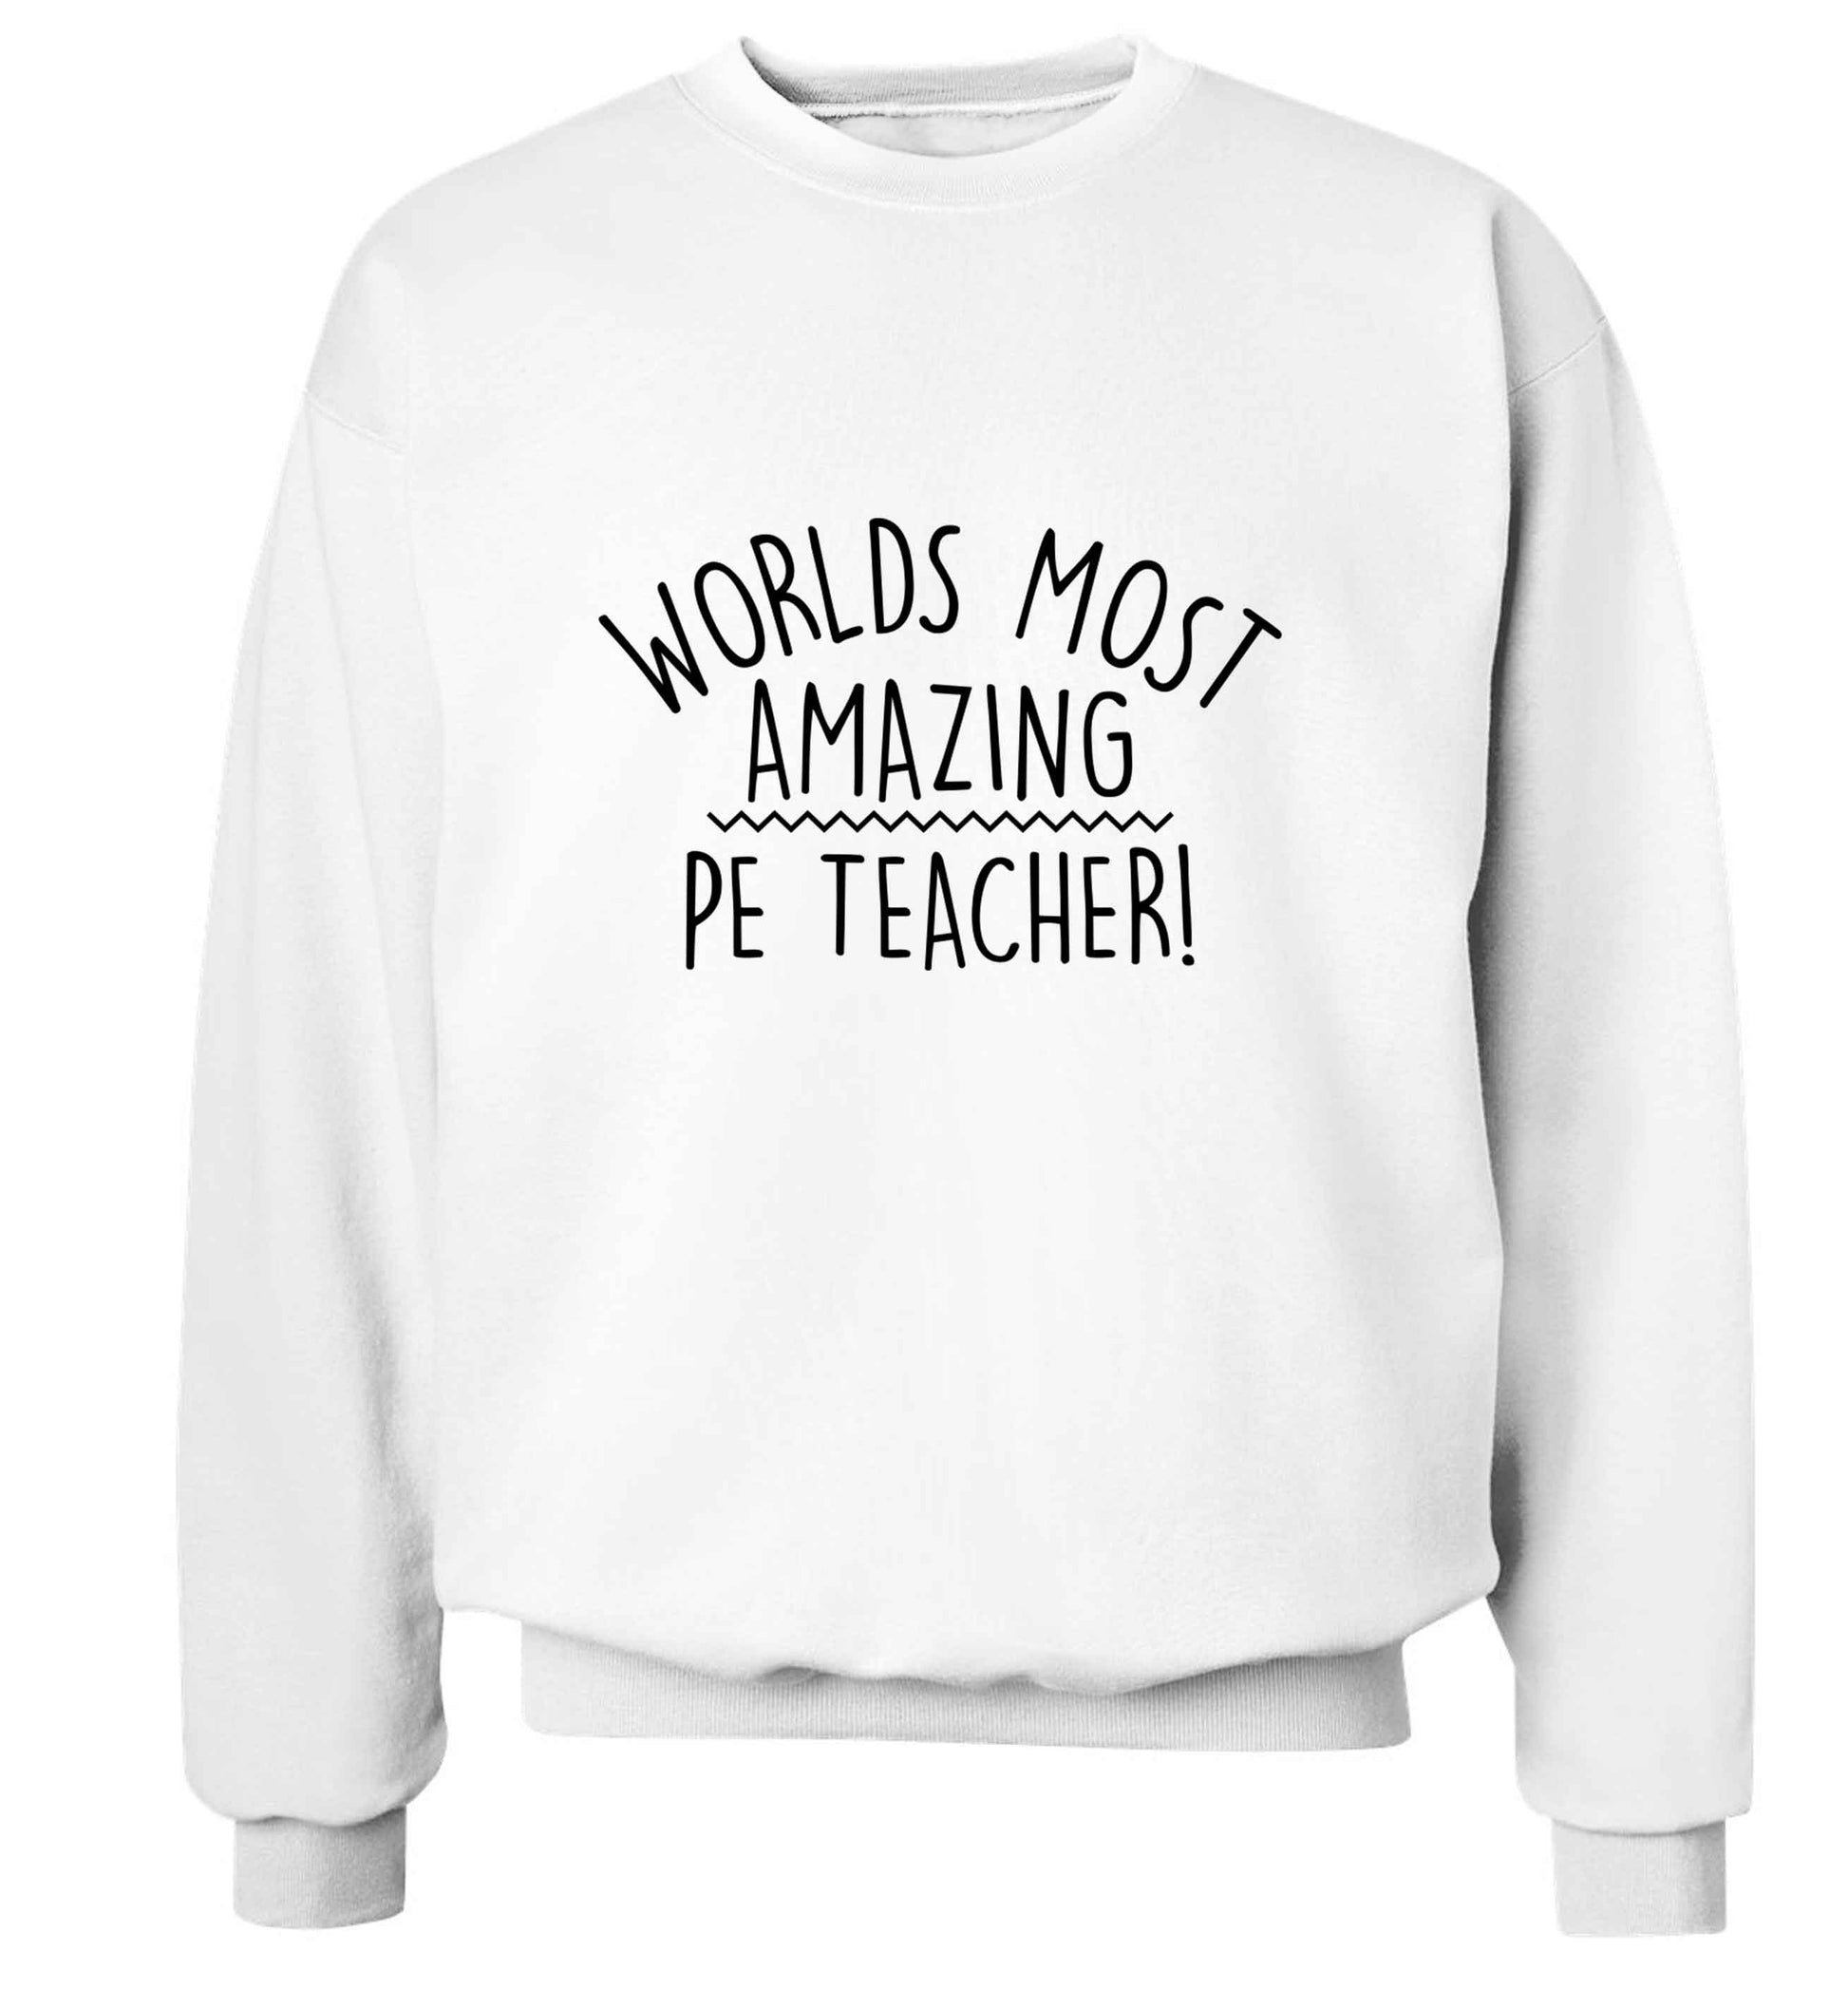 Worlds most amazing PE teacher adult's unisex white sweater 2XL